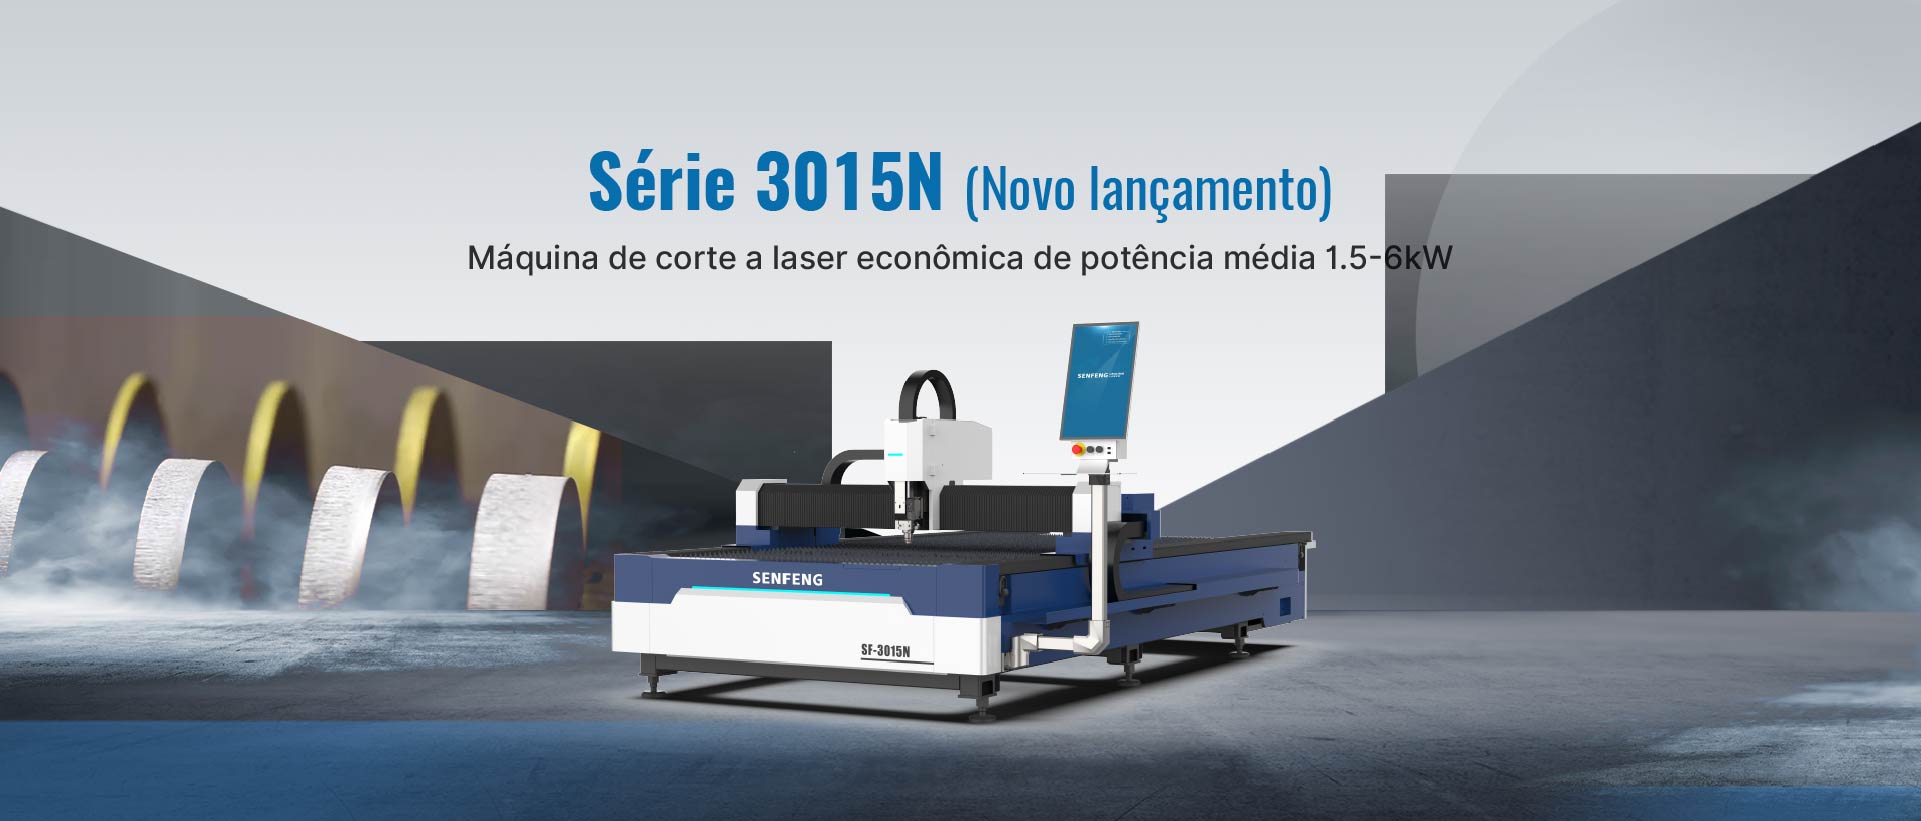 3015N Máquina de corte a laser econômica de potência média 1.5-6kW